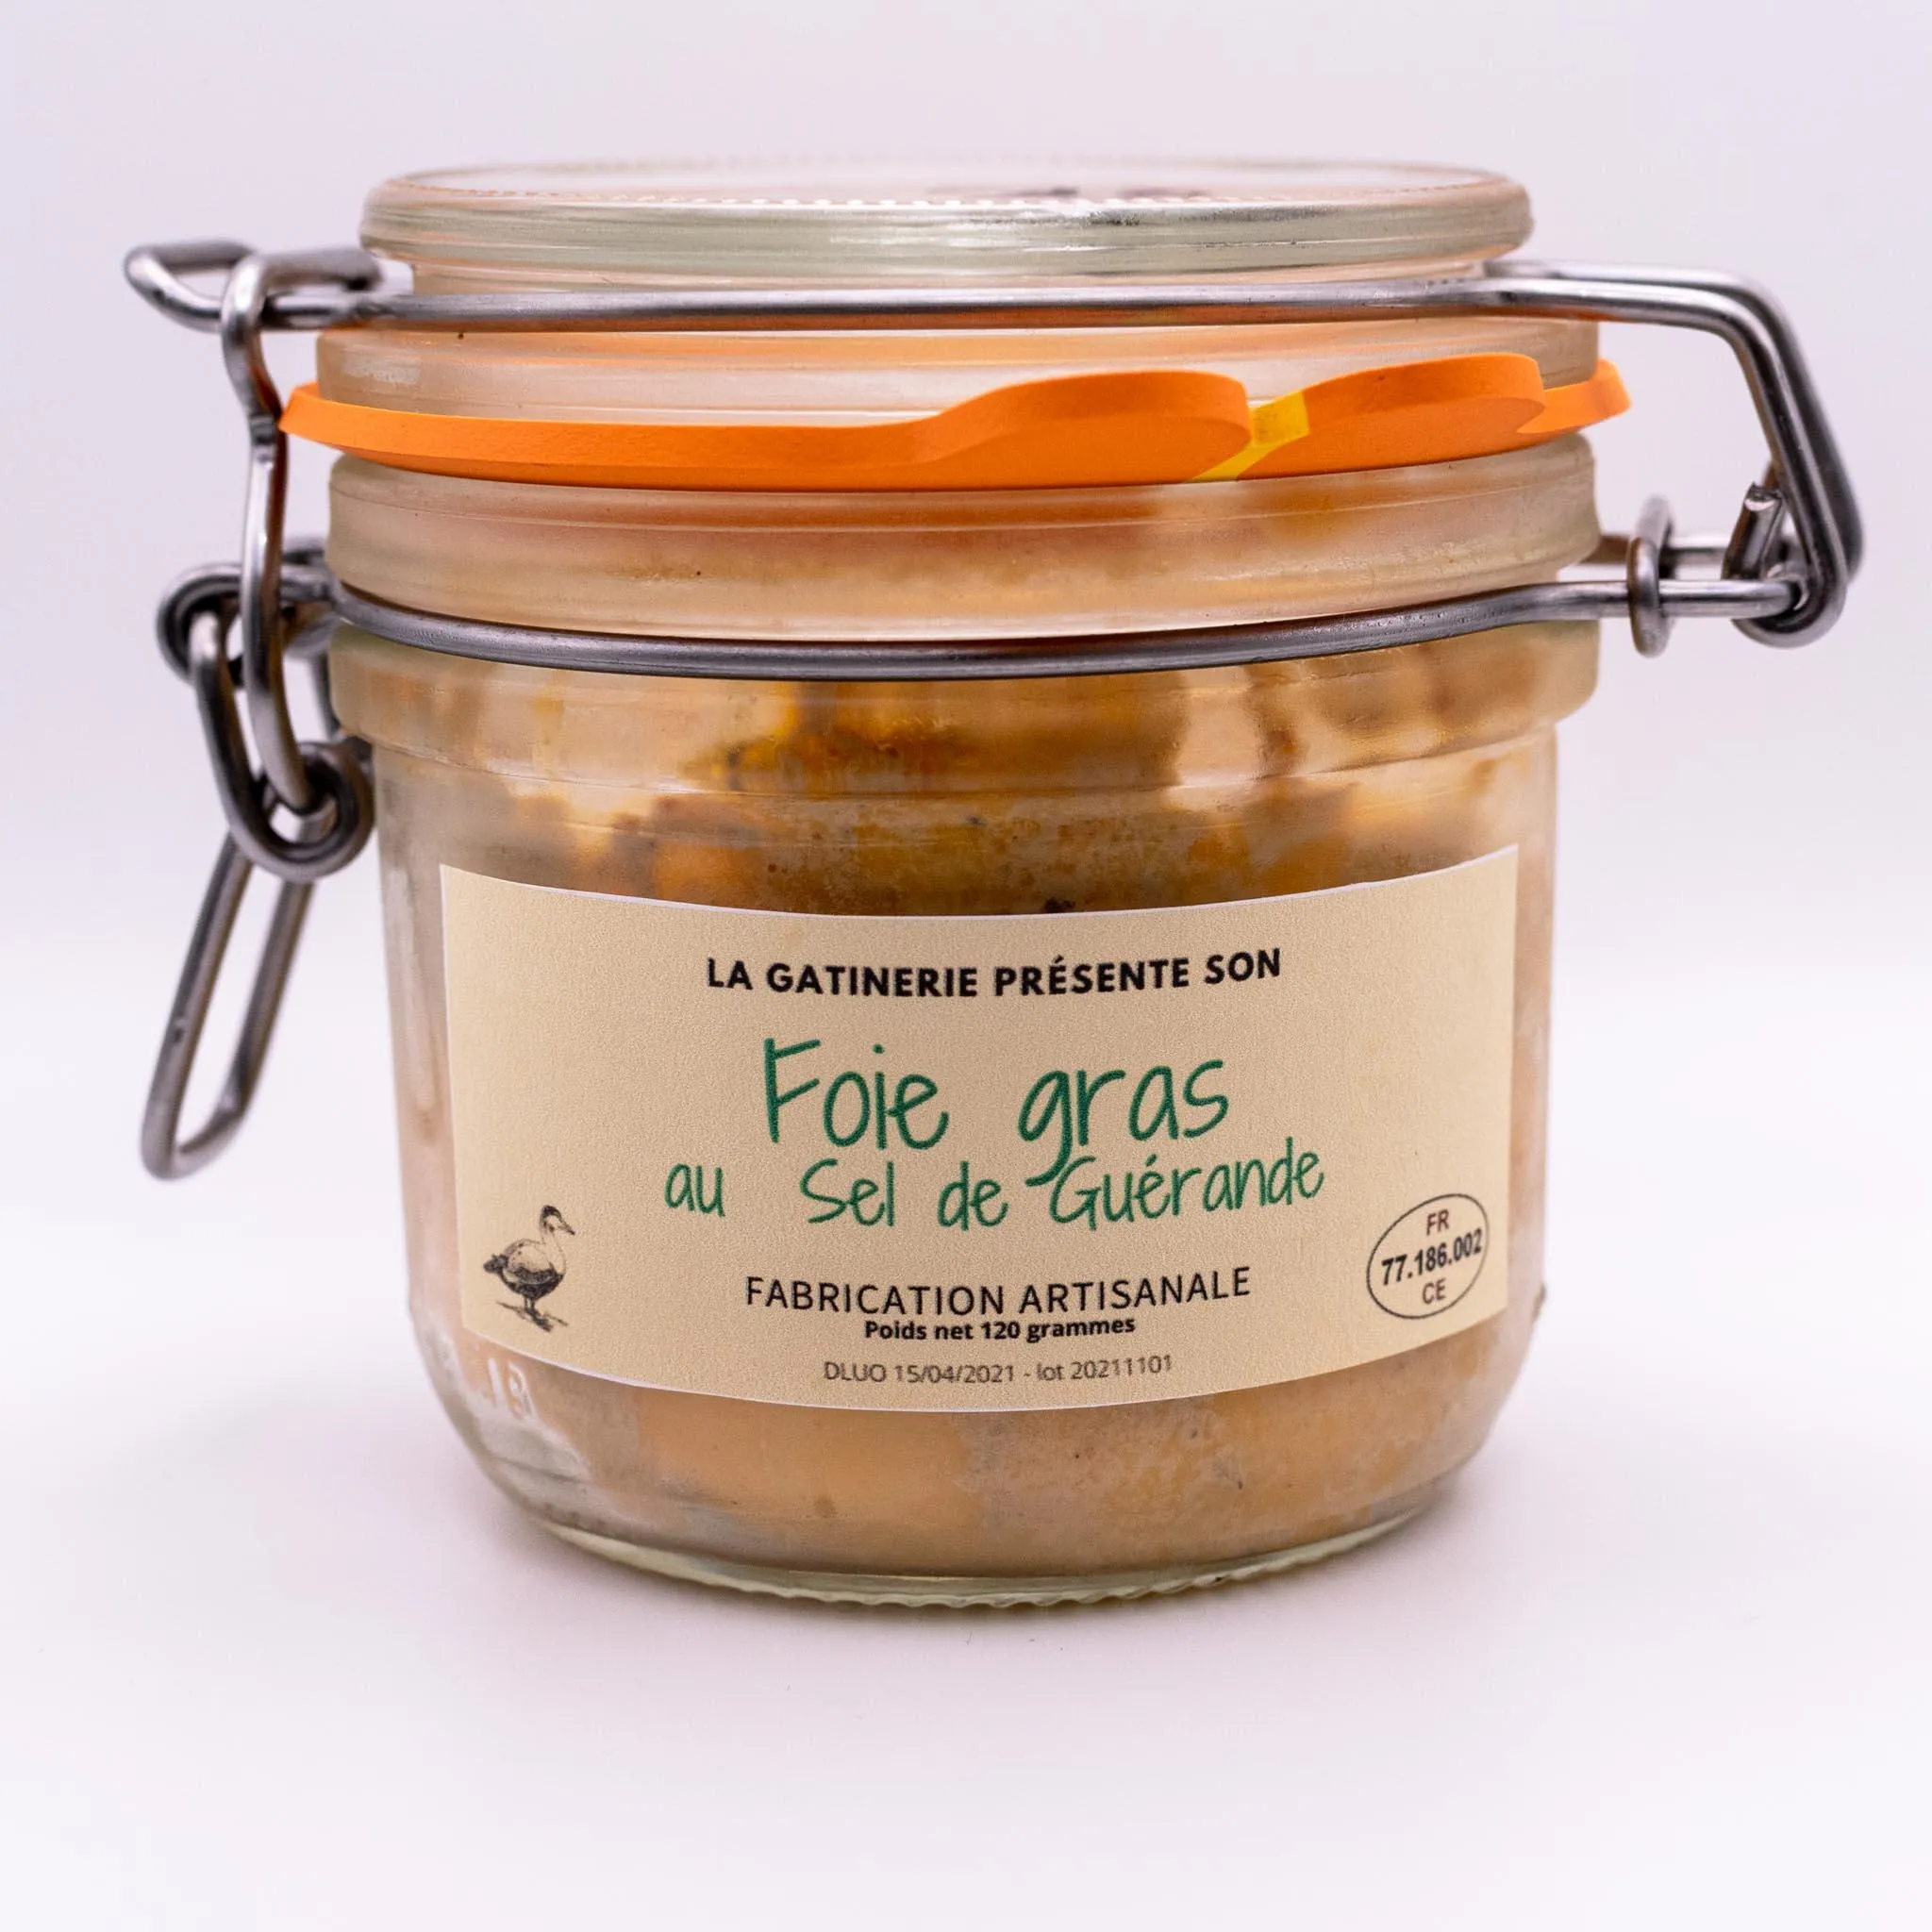 Le foie gras au sel de Guérande